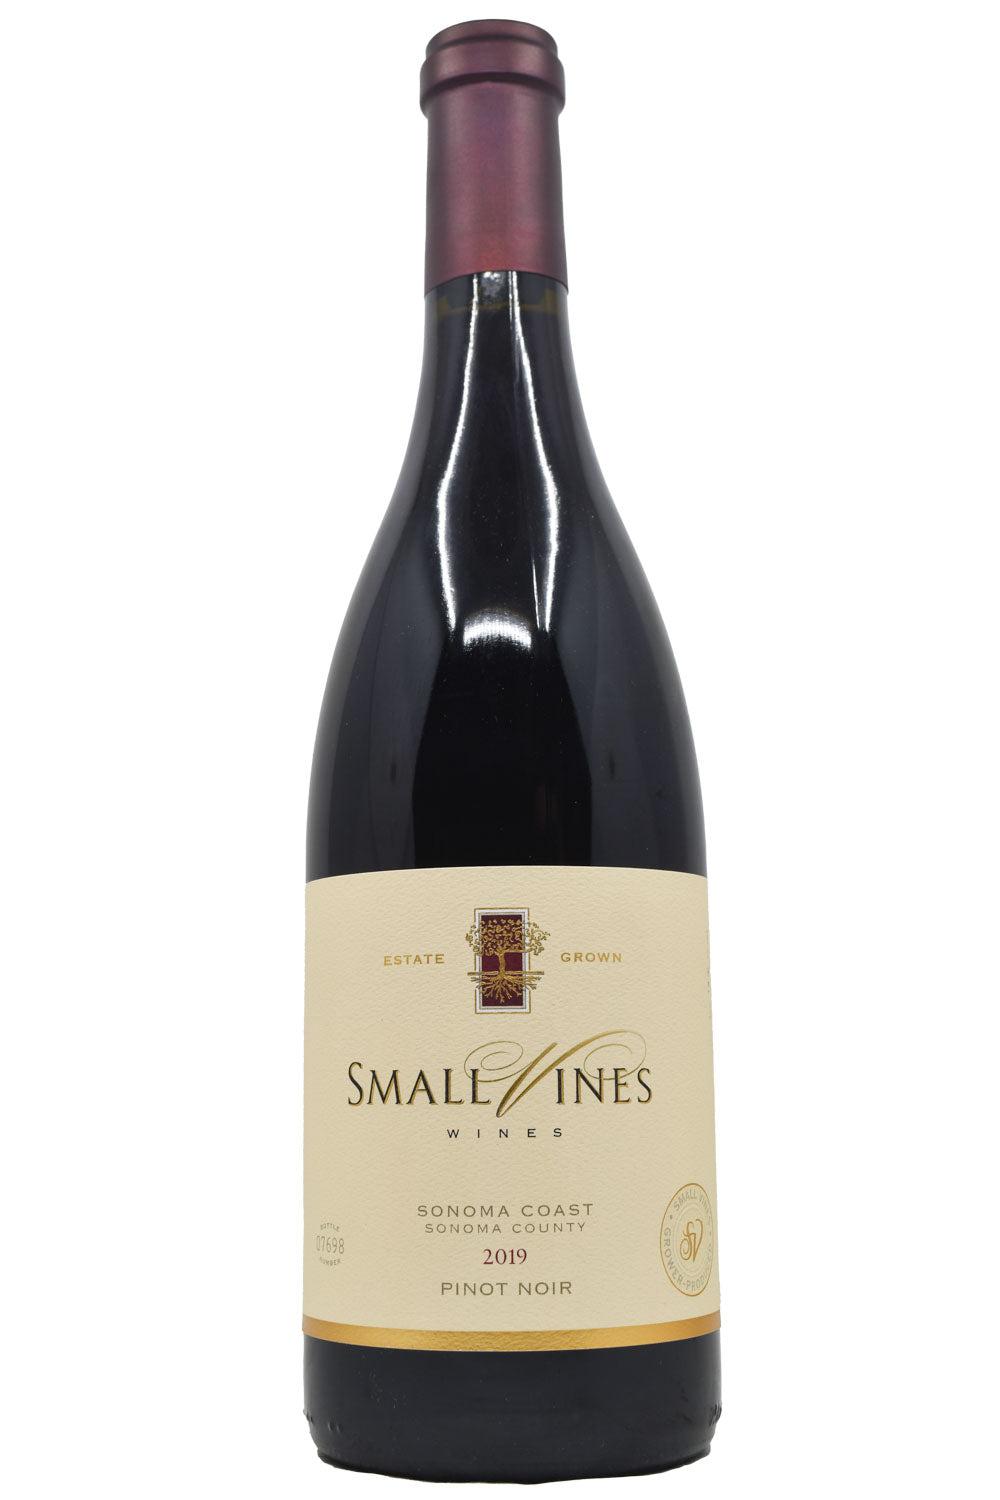 Small Vines Sonoma Coast Pinot Noir 2019